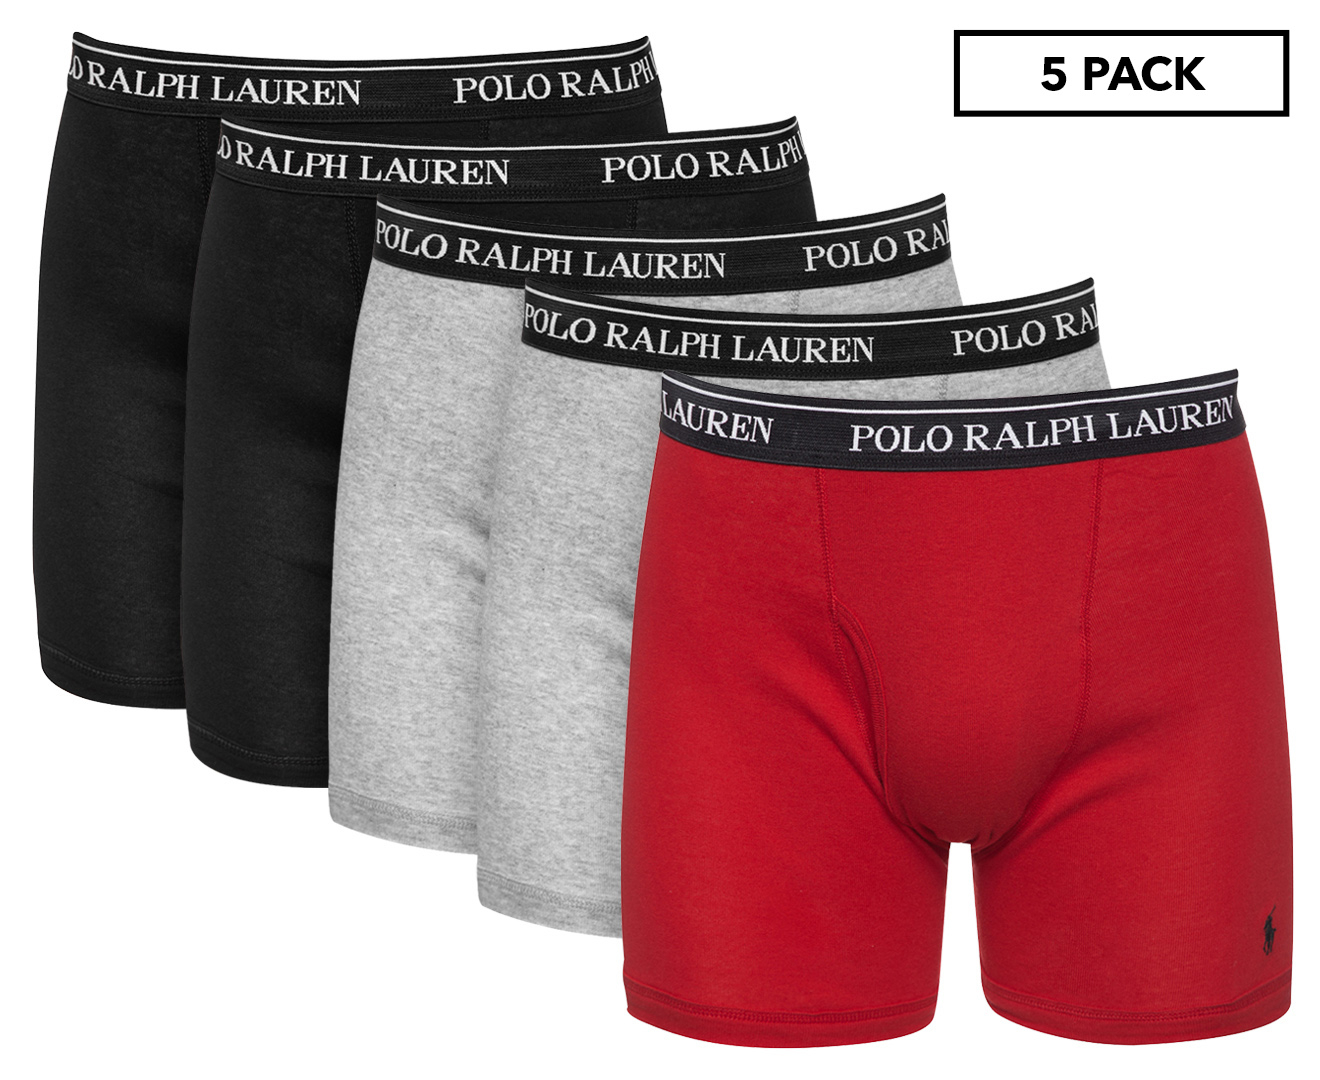 Polo Ralph Lauren Breathable Mesh Boxer Briefs 3-Pack - Cruise